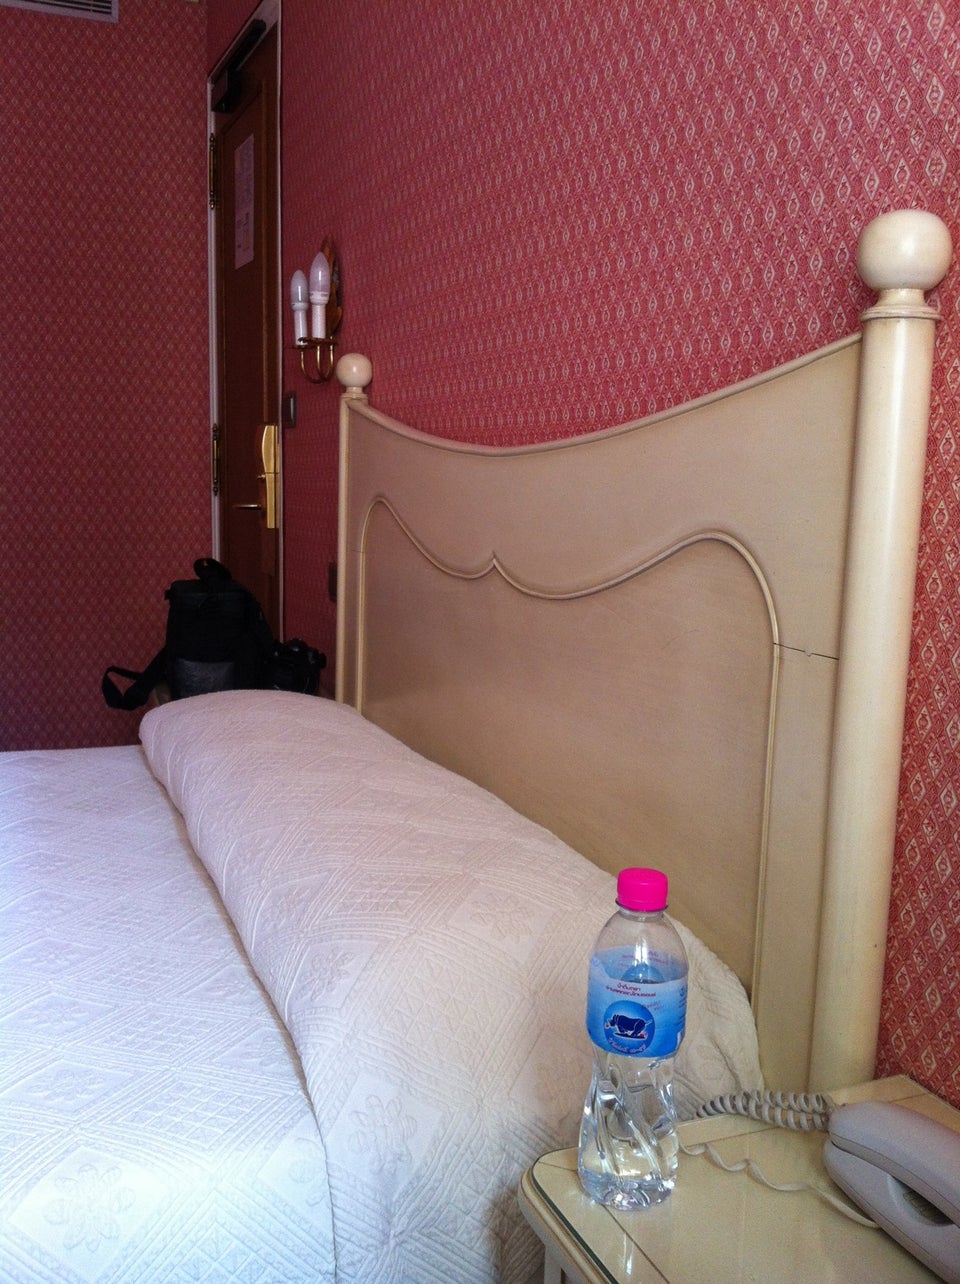 Photo of Hotel Beaubourg